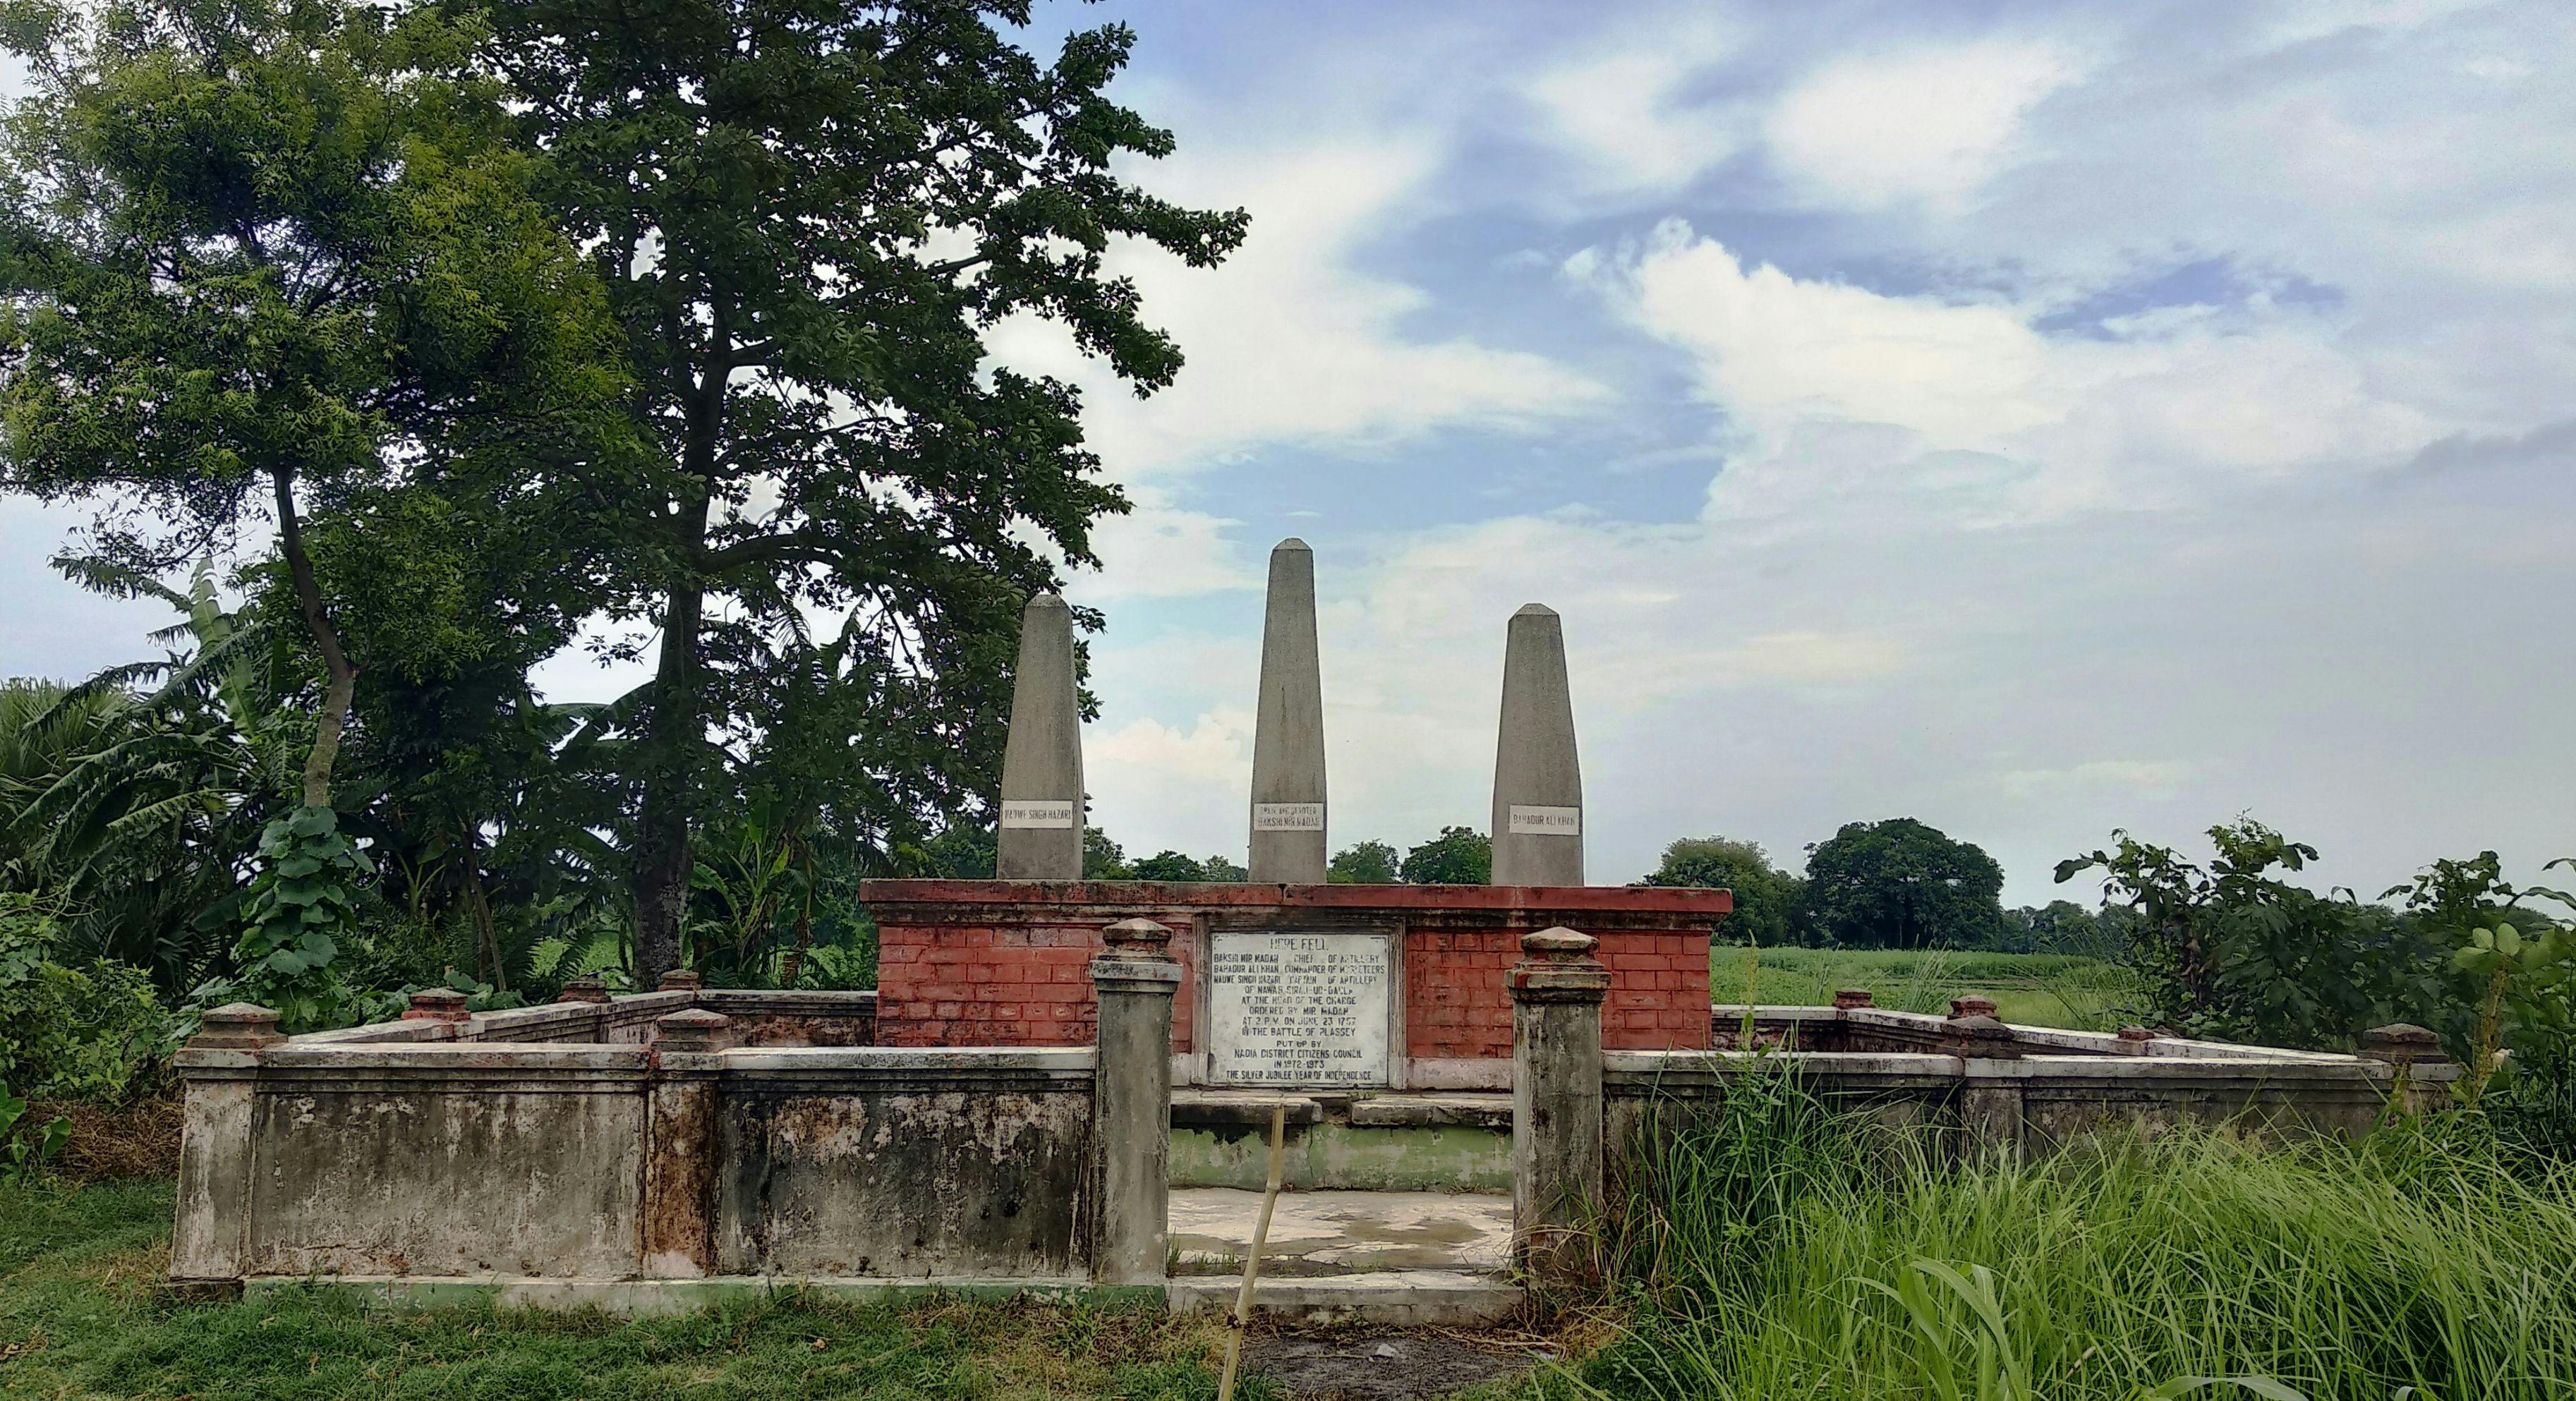 A set of three Obelisks of martyr Mir Madan, Nauwe Singh Hazari and Bahadur Khan were erected near Plassey battlefield (1972-1973) by the Nadia District Citizens Council